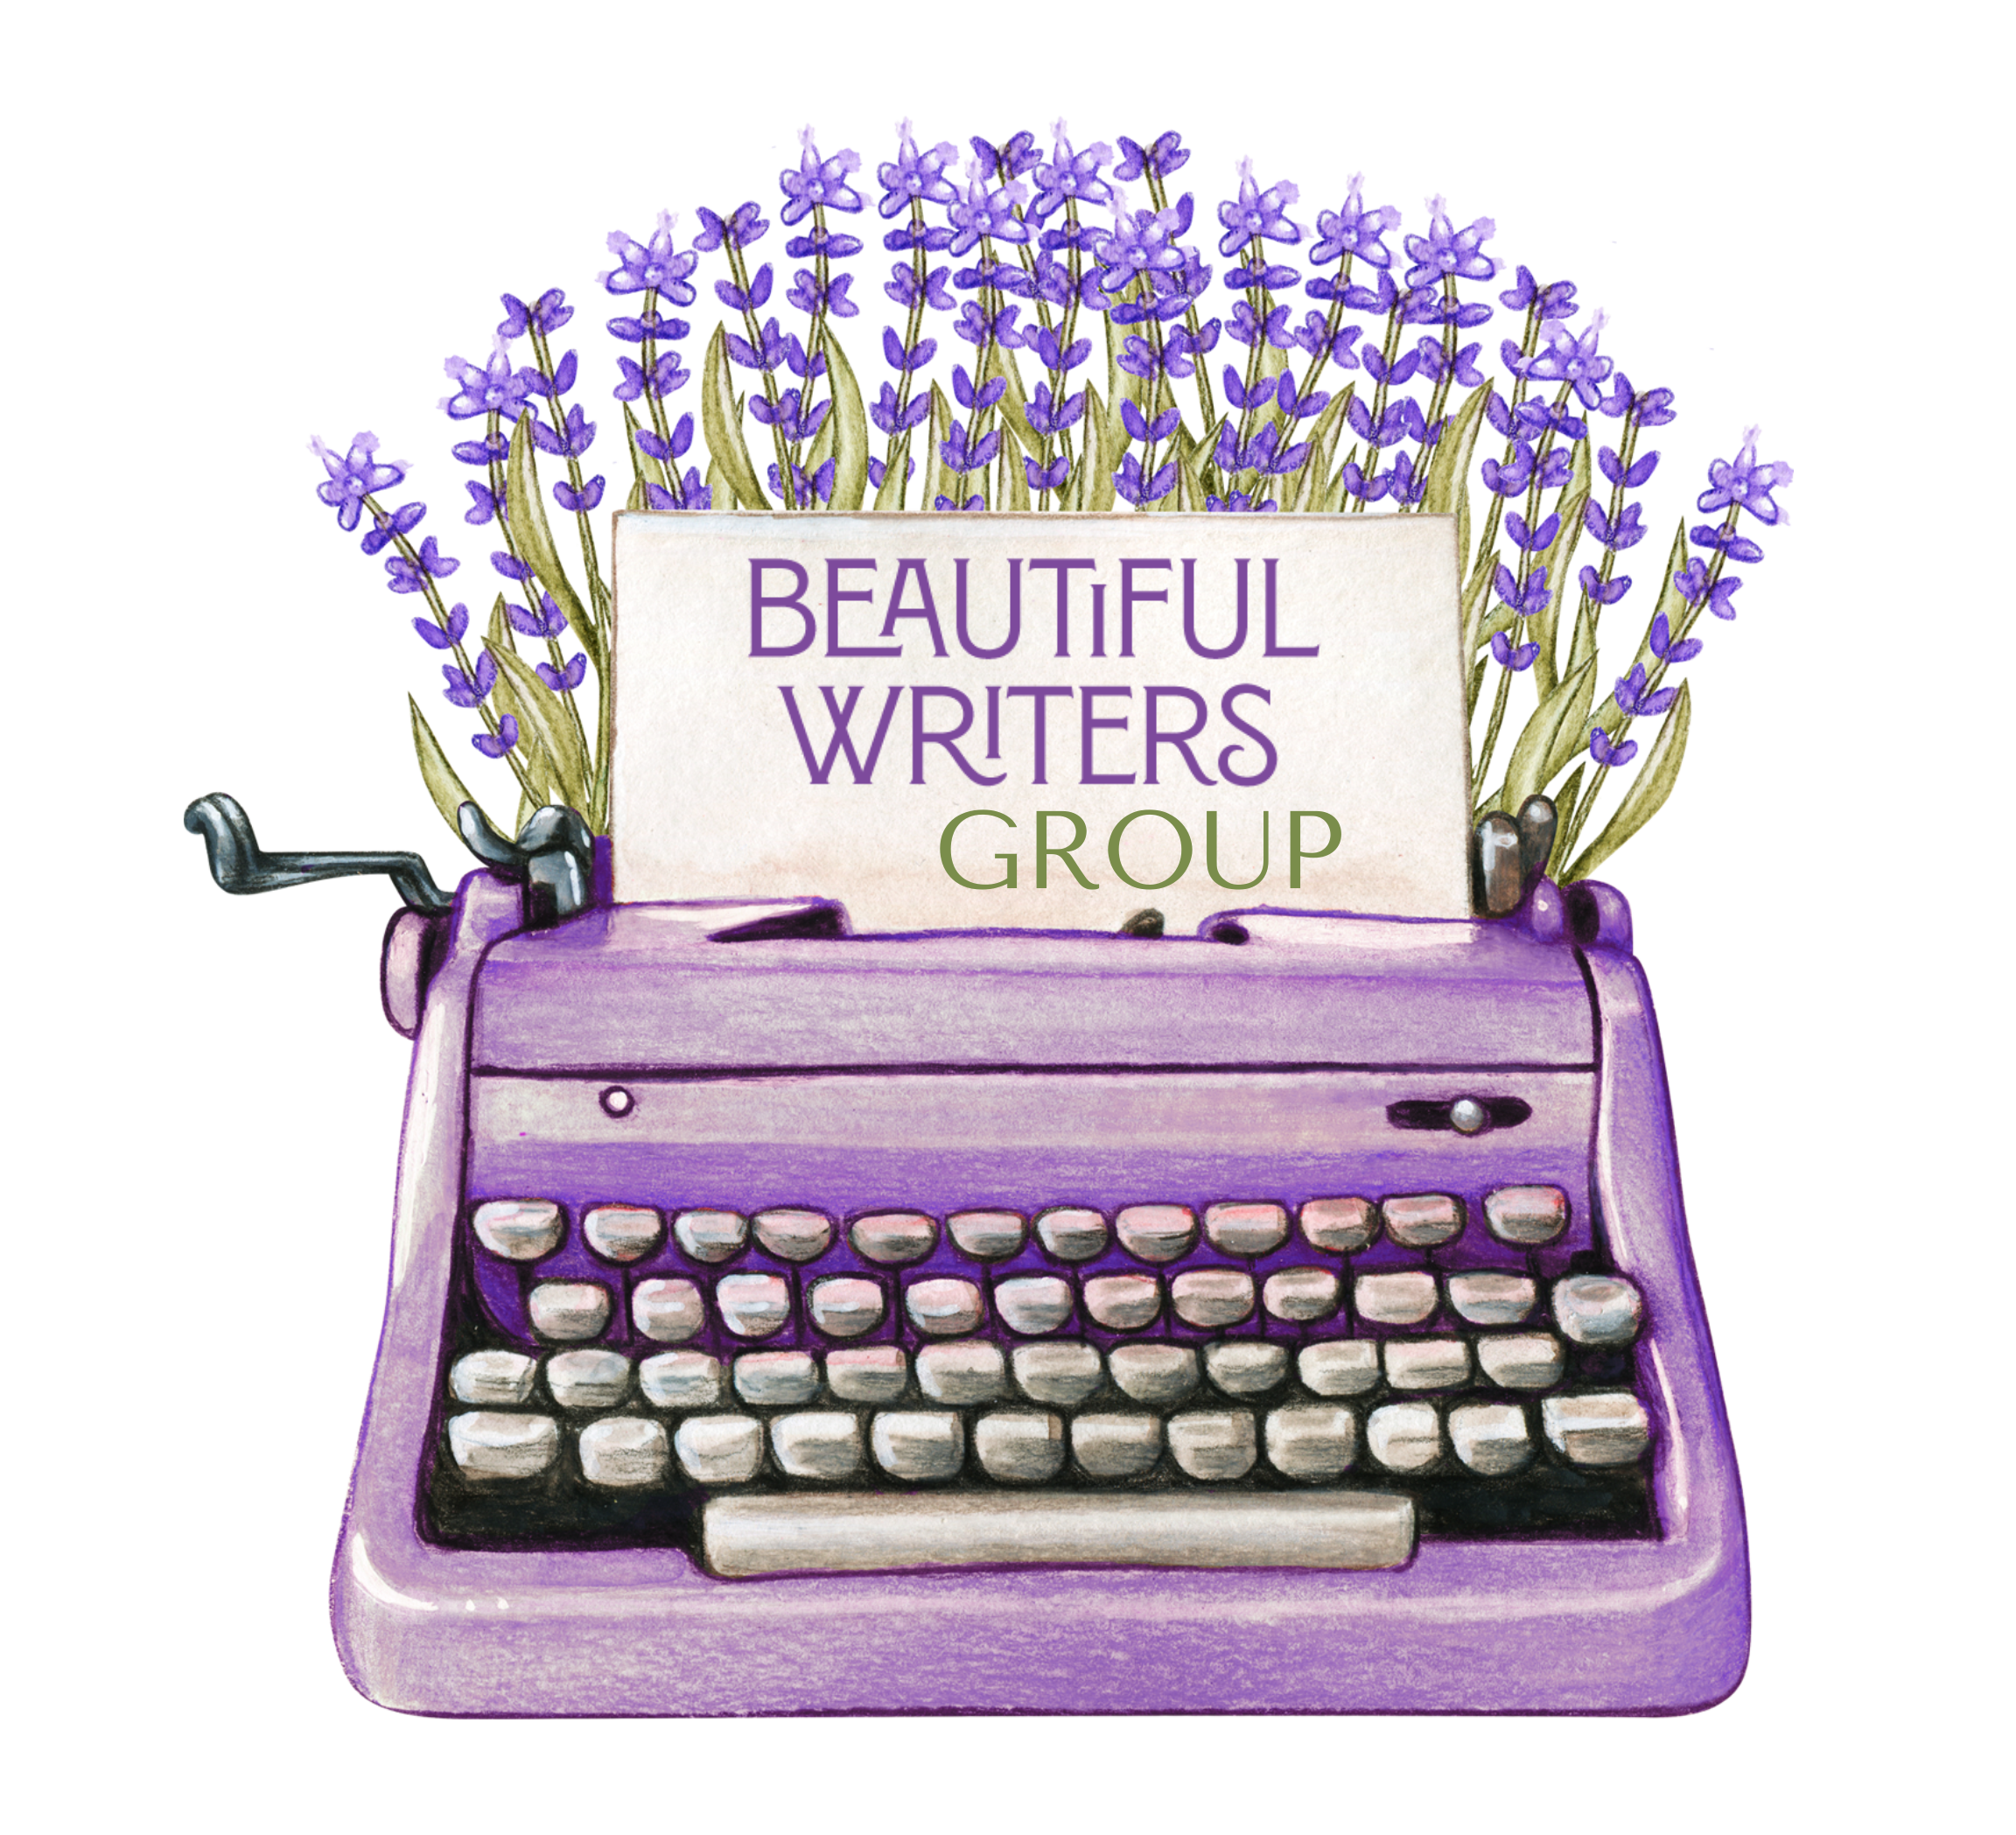 The Beautiful Writers Group